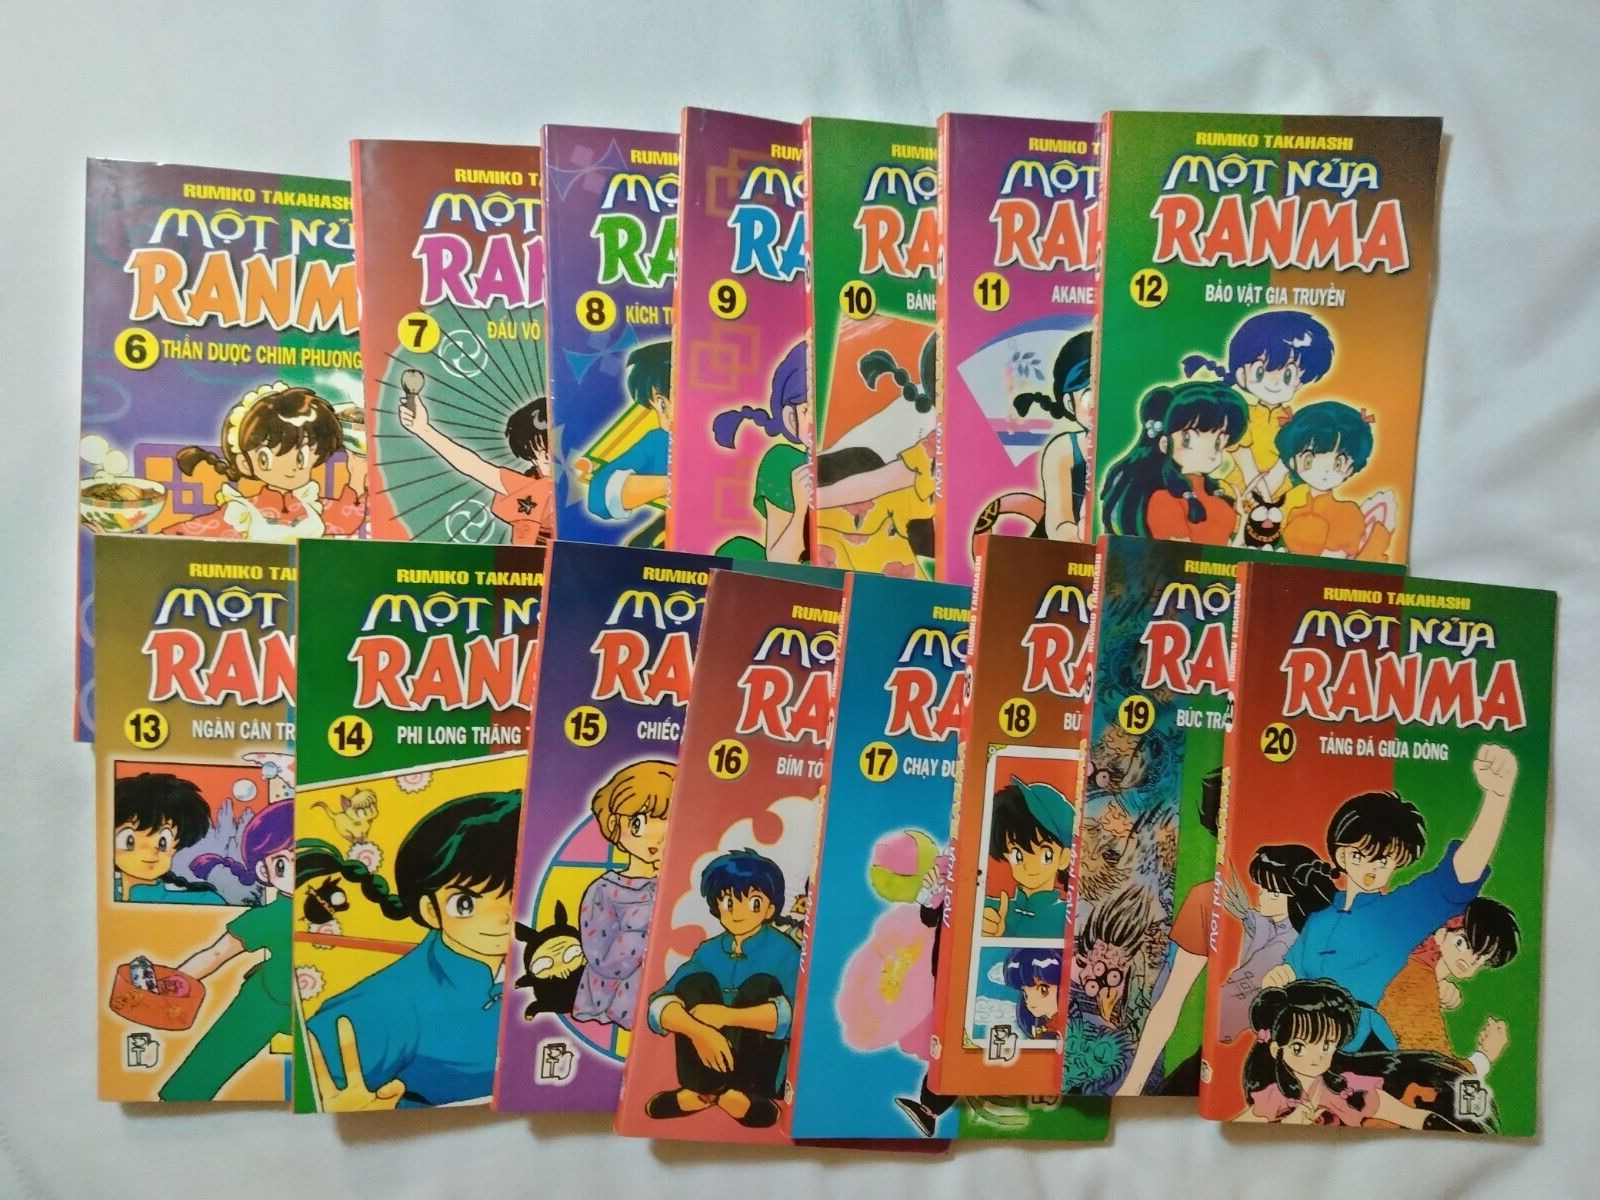 Một Nữa Ranma by Rumiko Takahashi Ranma 1/2 Graphic Novel Volume 6-20 LOT